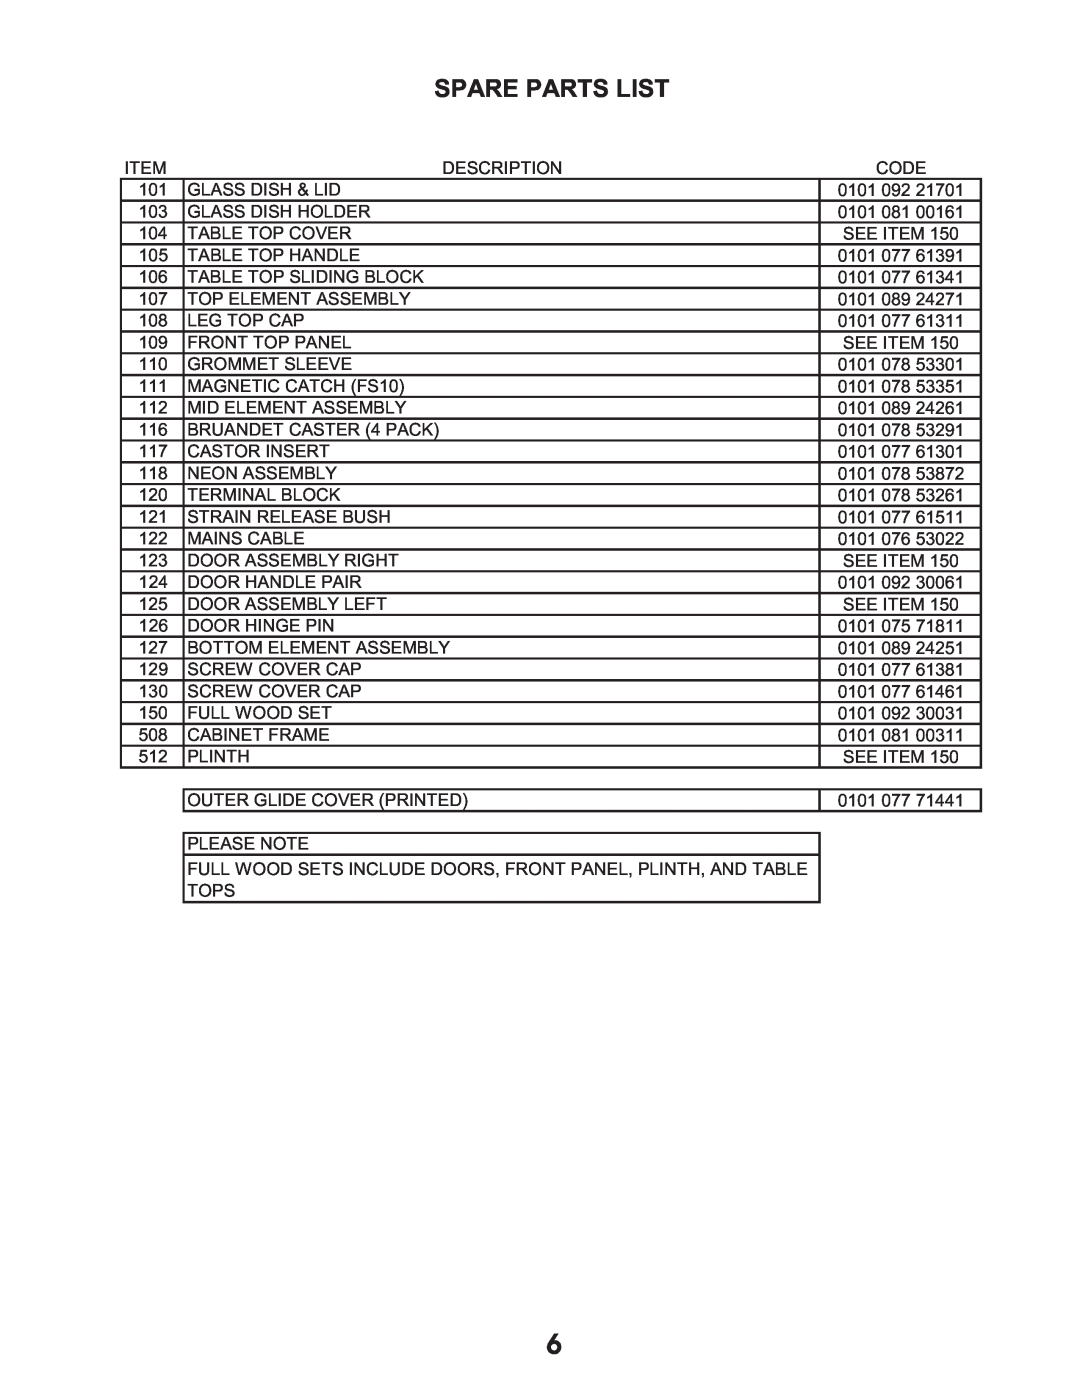 Equator CM 3000 service manual Spare Parts List 